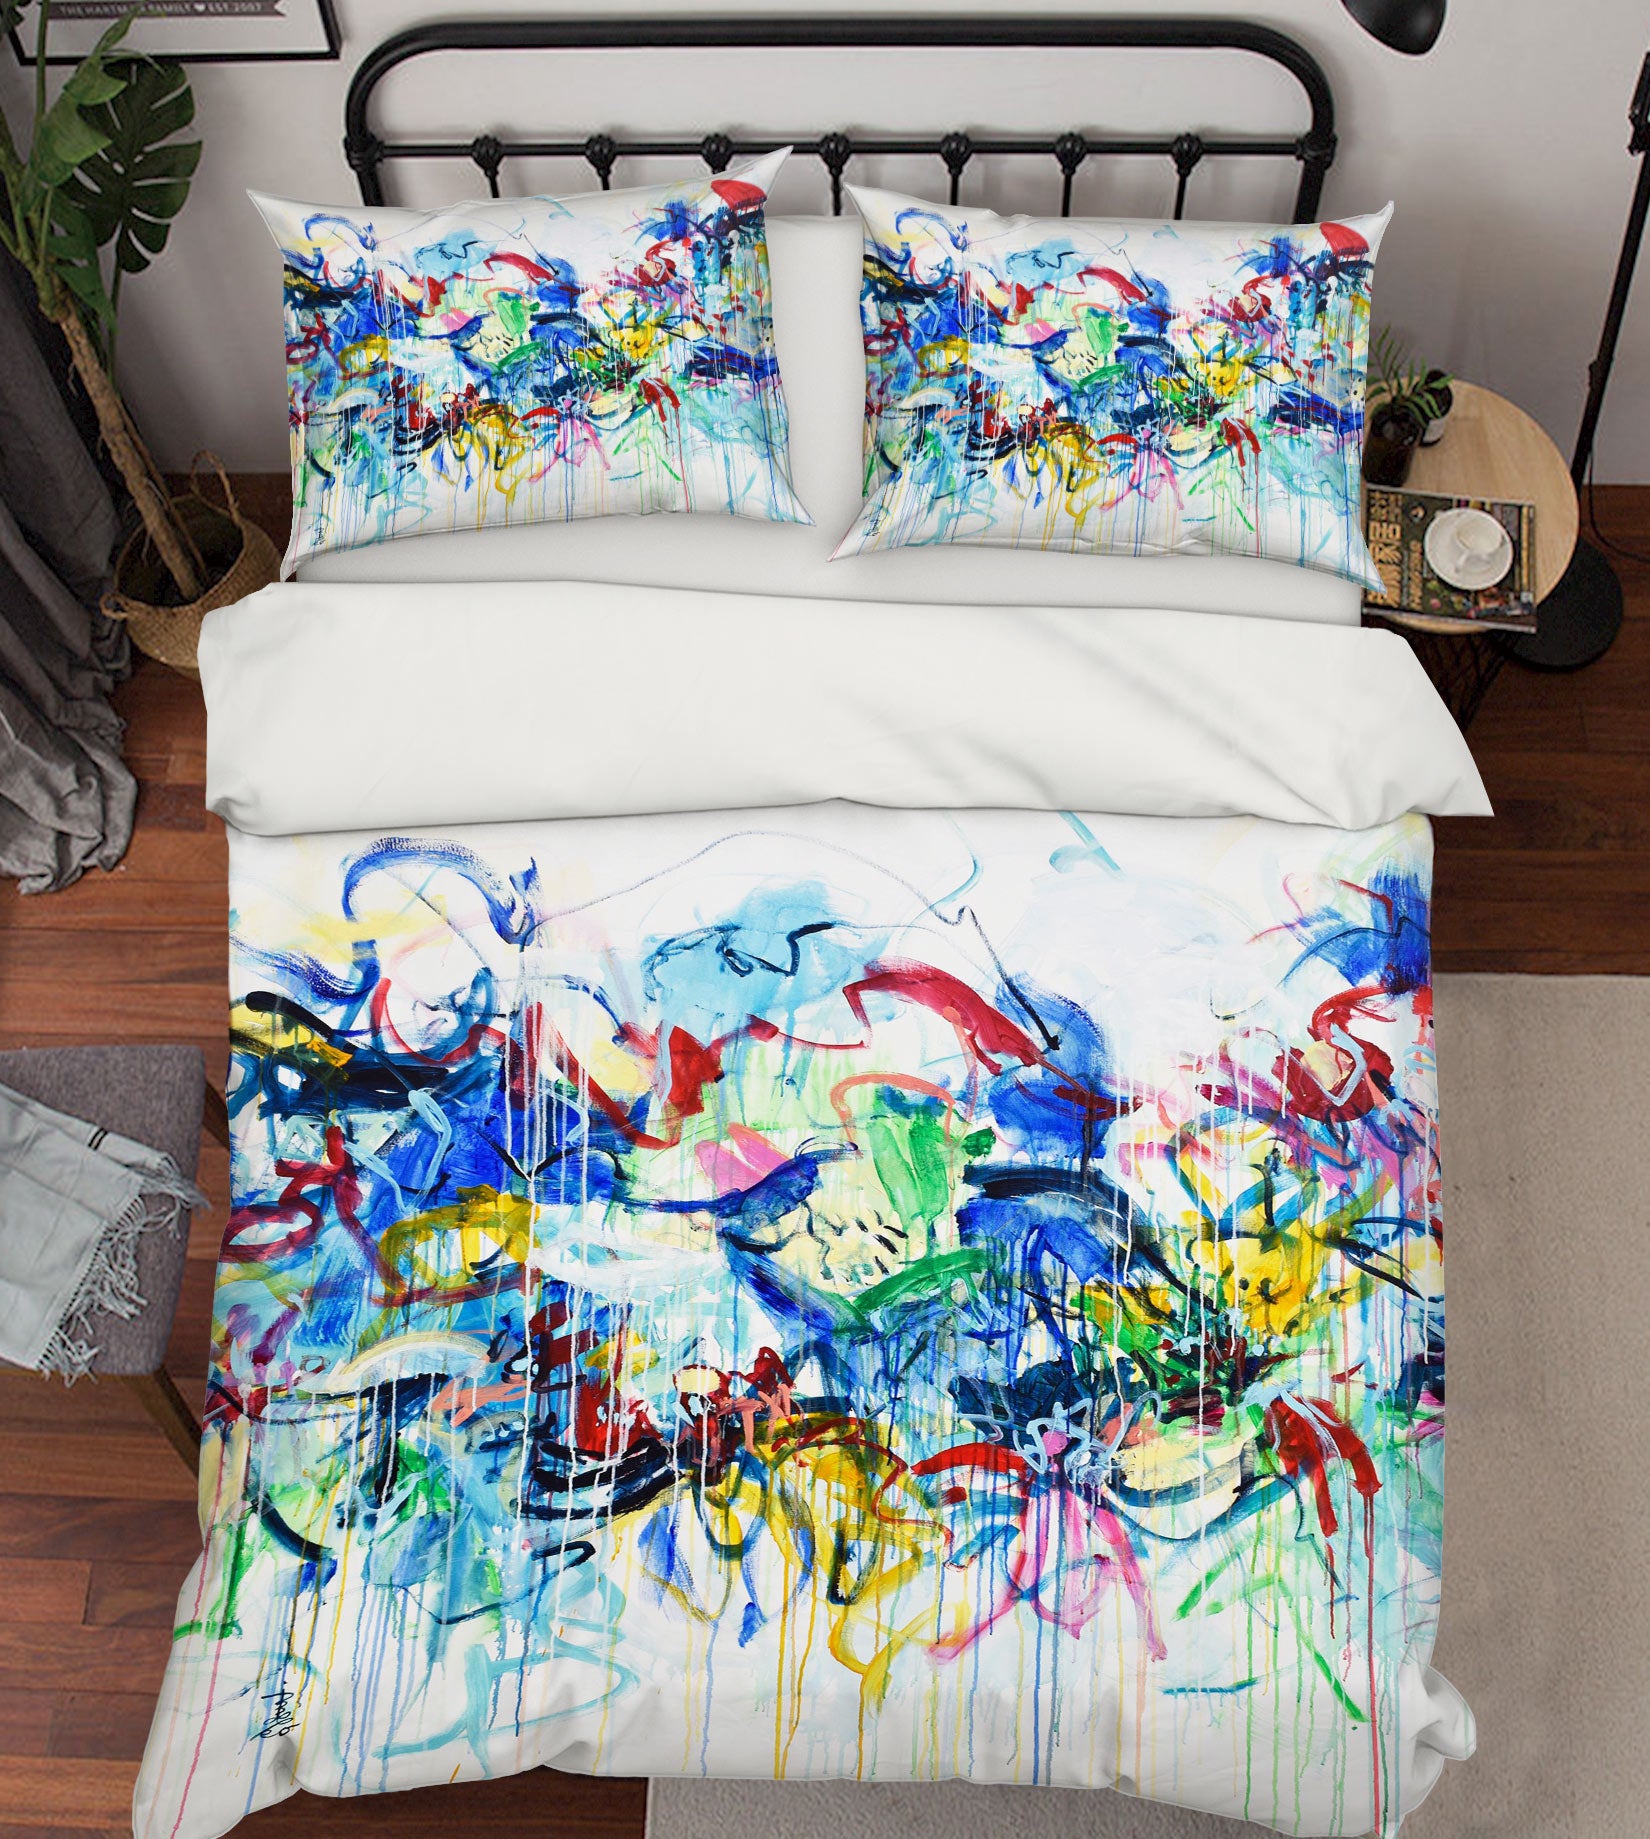 3D Colorful Graffiti 1195 Misako Chida Bedding Bed Pillowcases Quilt Cover Duvet Cover